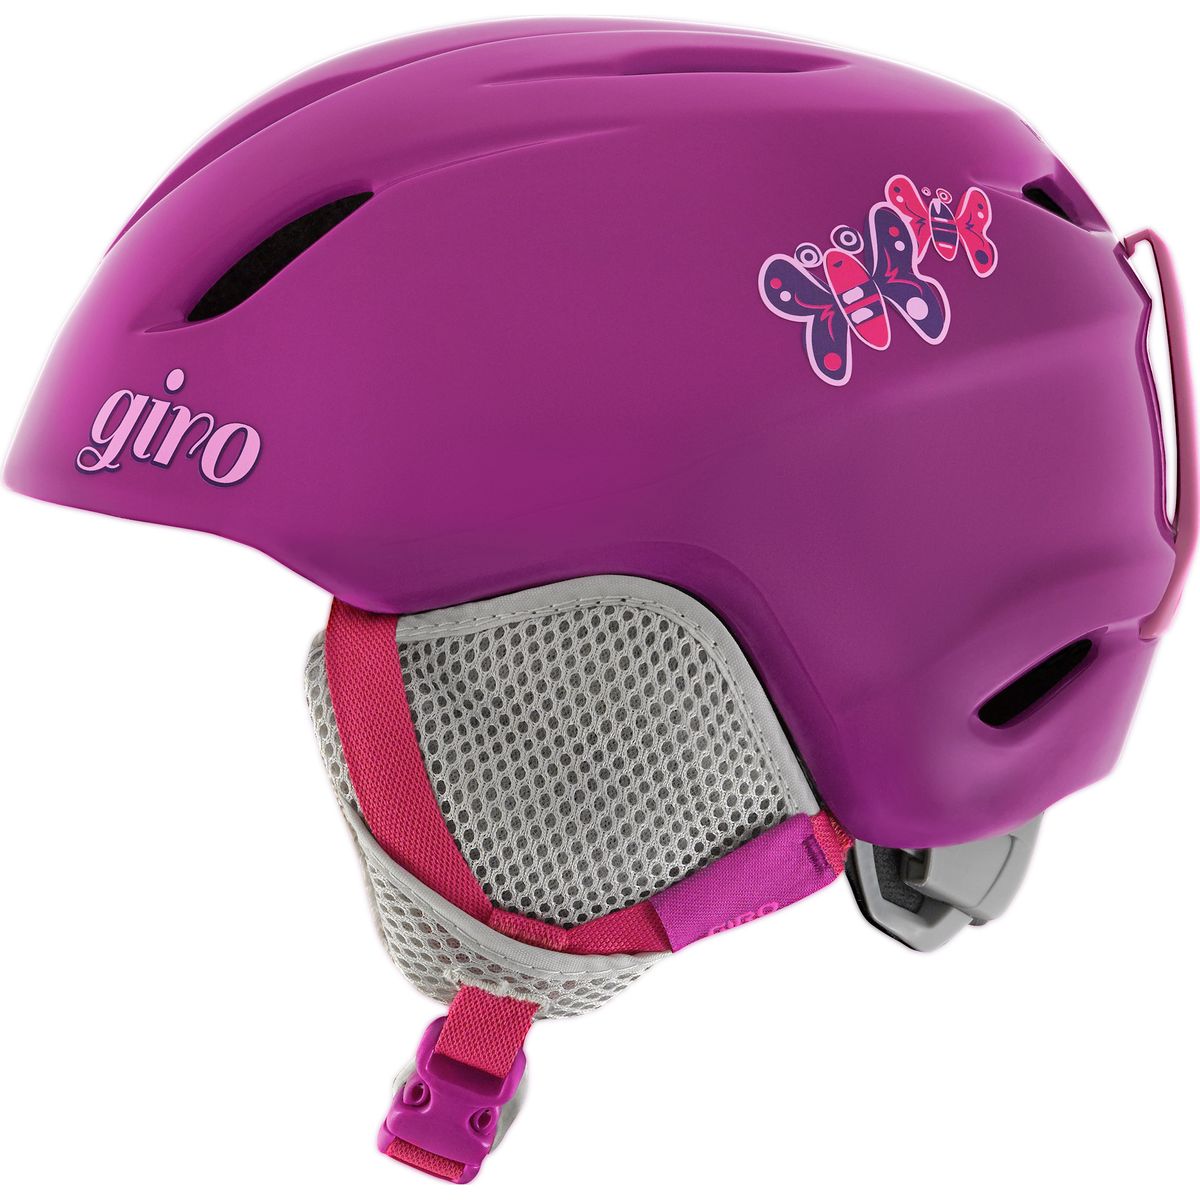 Giro Launch Helmet - Kids' Berry Butterflies